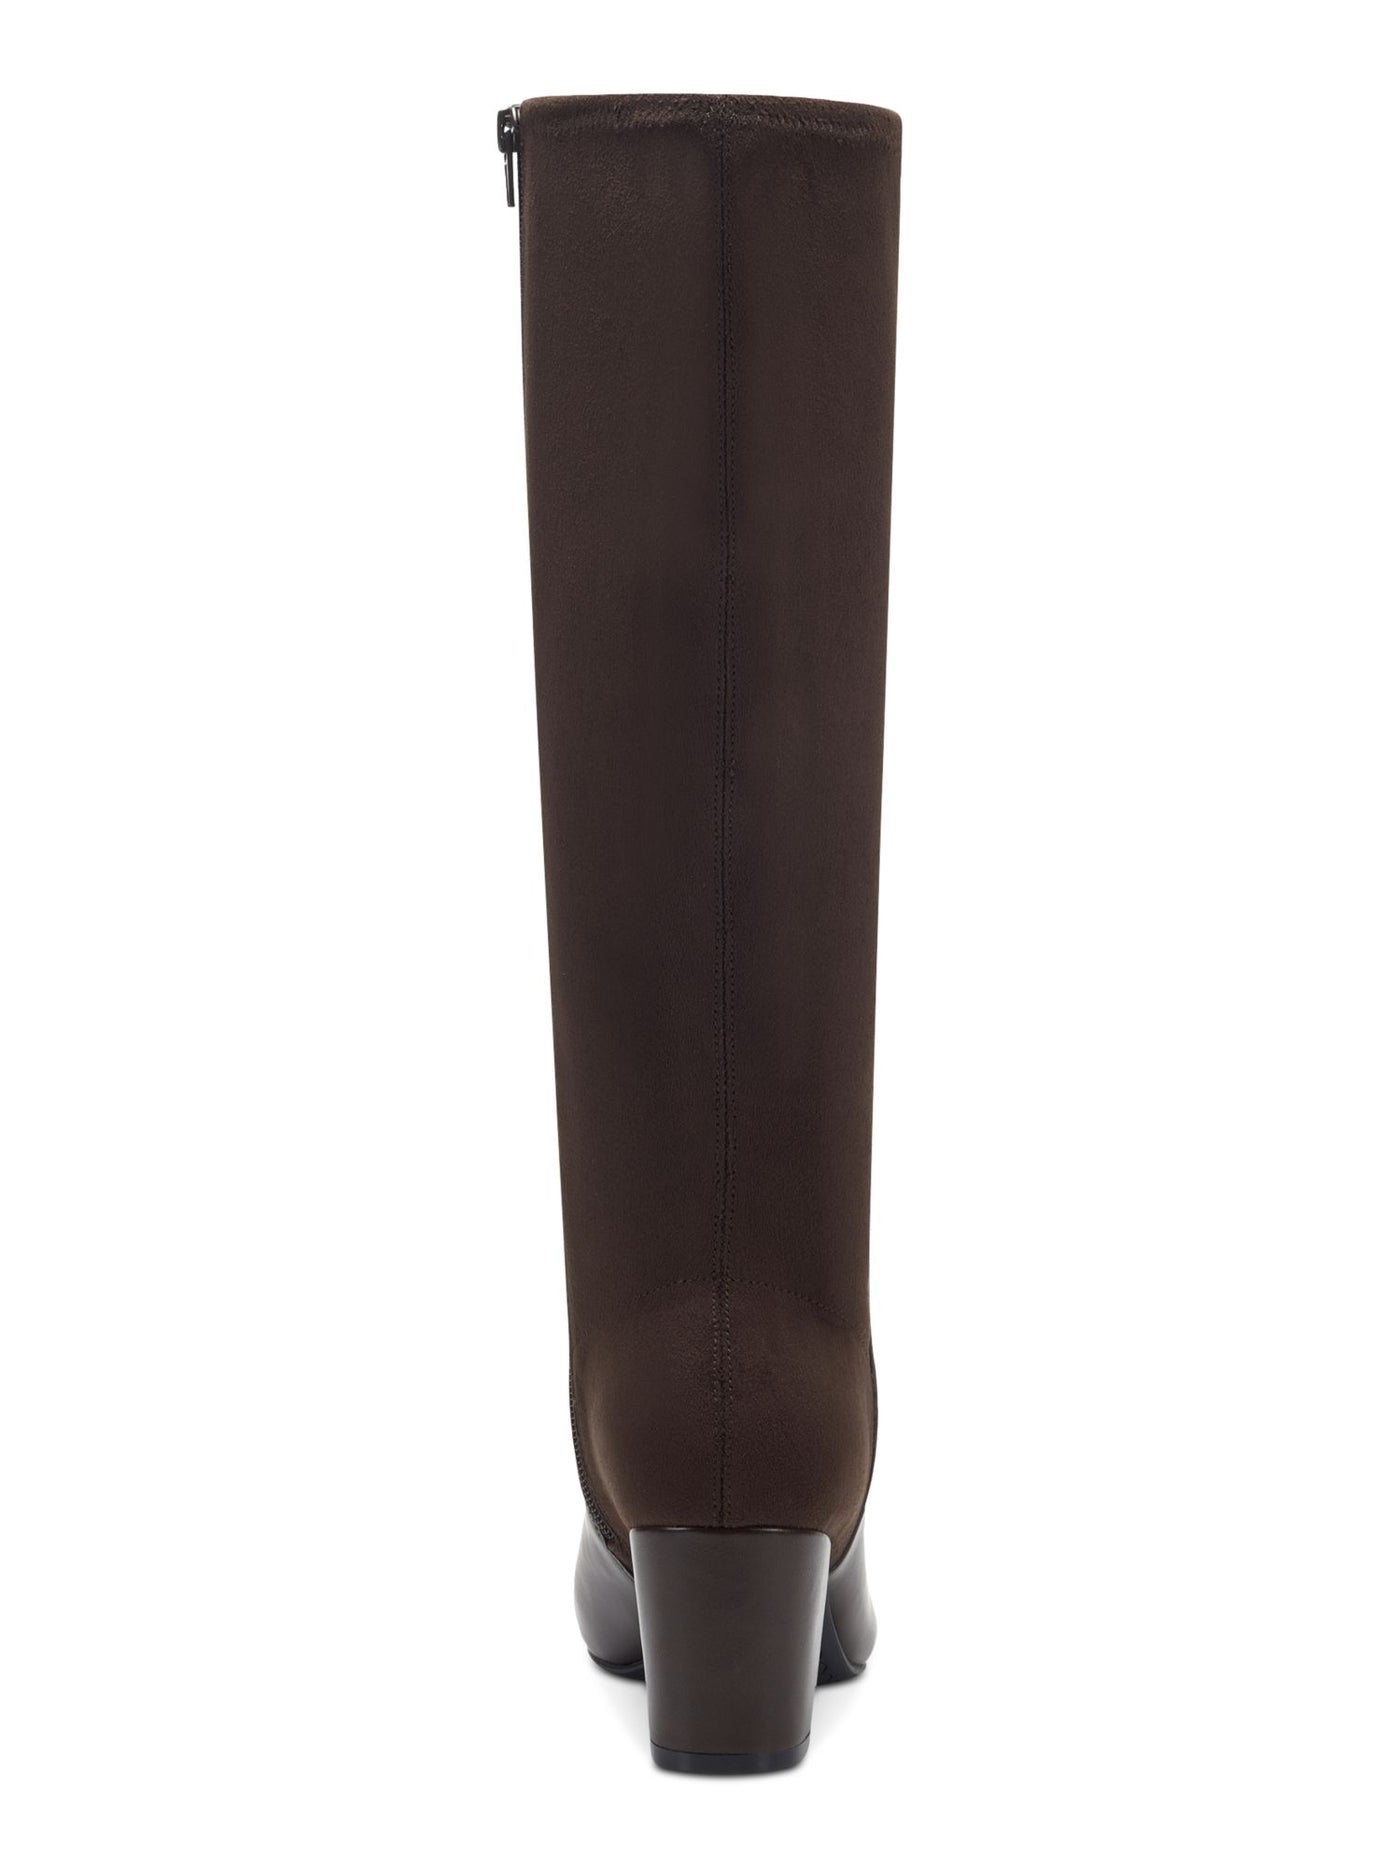 CHARTER CLUB Womens Chocolate Brown Mixed Media Cushioned Sacaria Almond Toe Block Heel Zip-Up Dress Boots 7.5 M